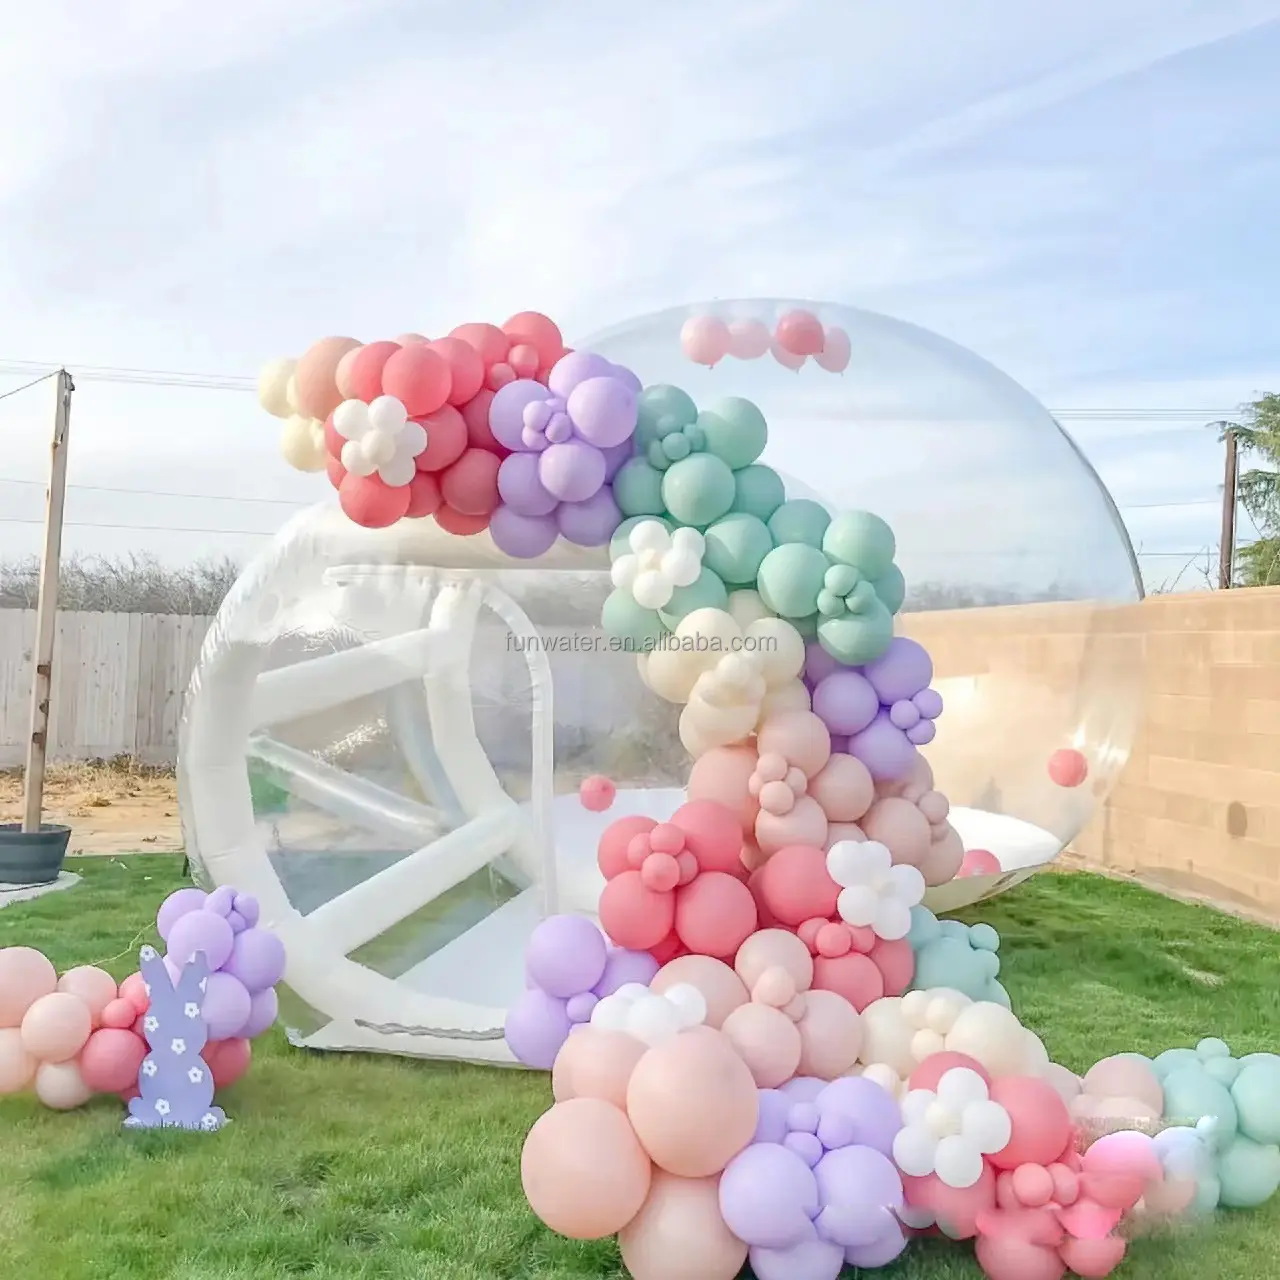 Наружная гигантская прозрачная надувная прозрачная купольная пузырьковая палатка нагреваемая надувная пузырьковая палатка с воздушными шарами